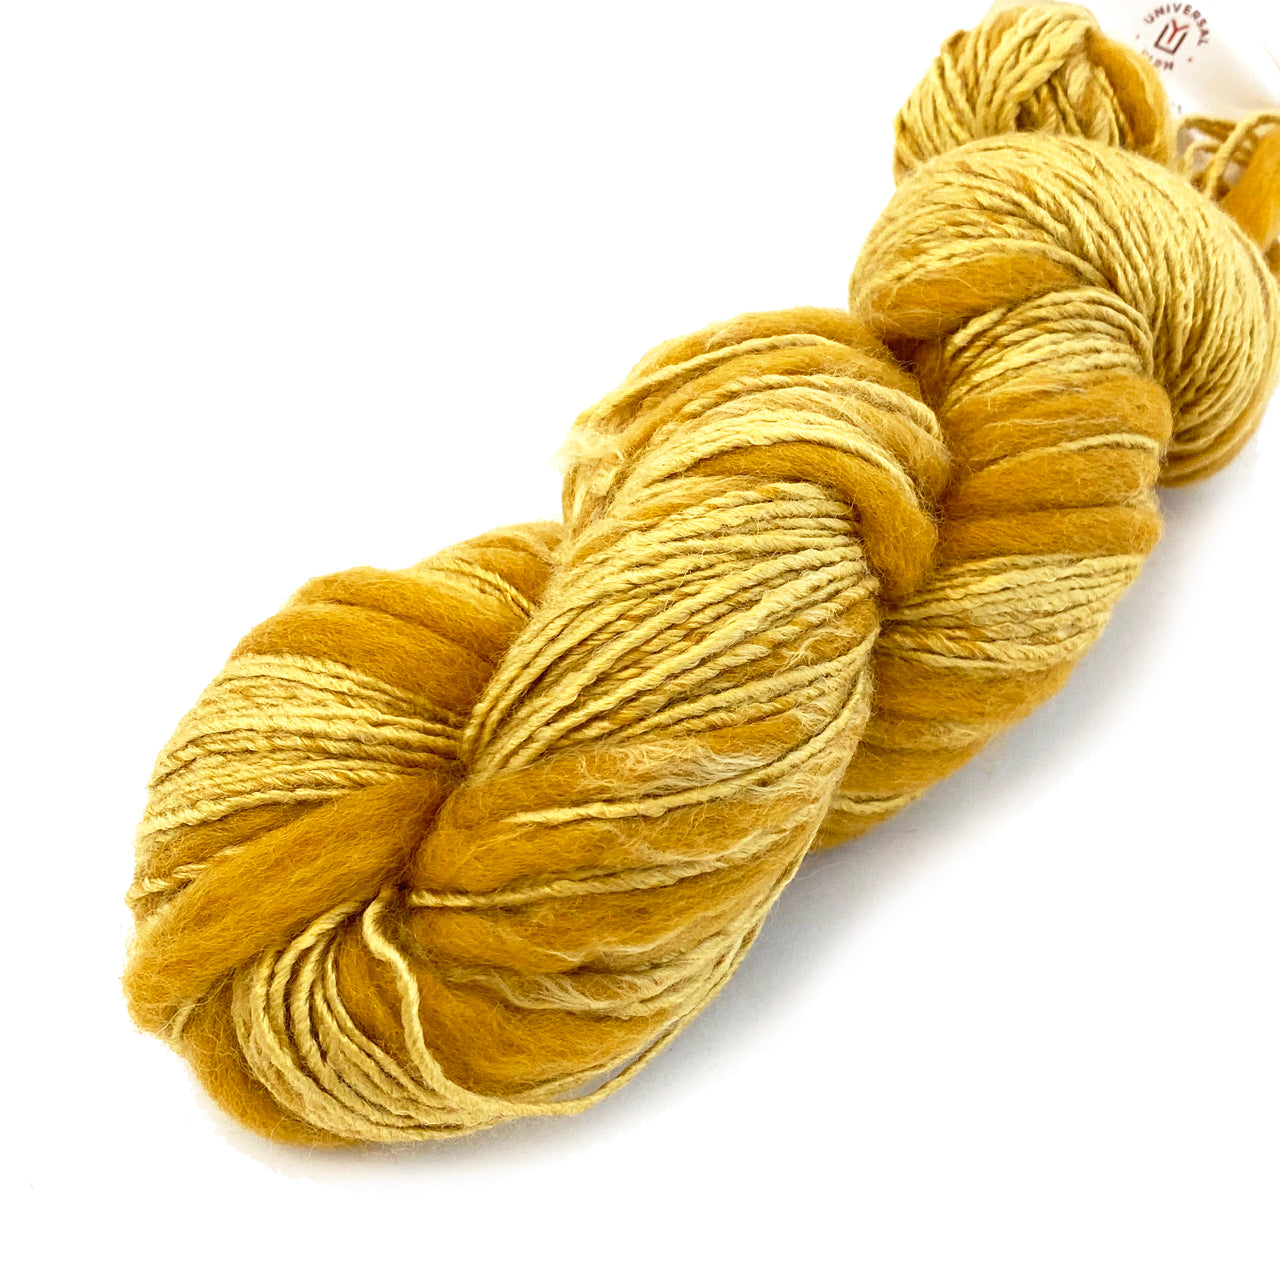 Wholesale dk yarns, Cotton, Polyester, Acrylic, Wool, Rayon & More 